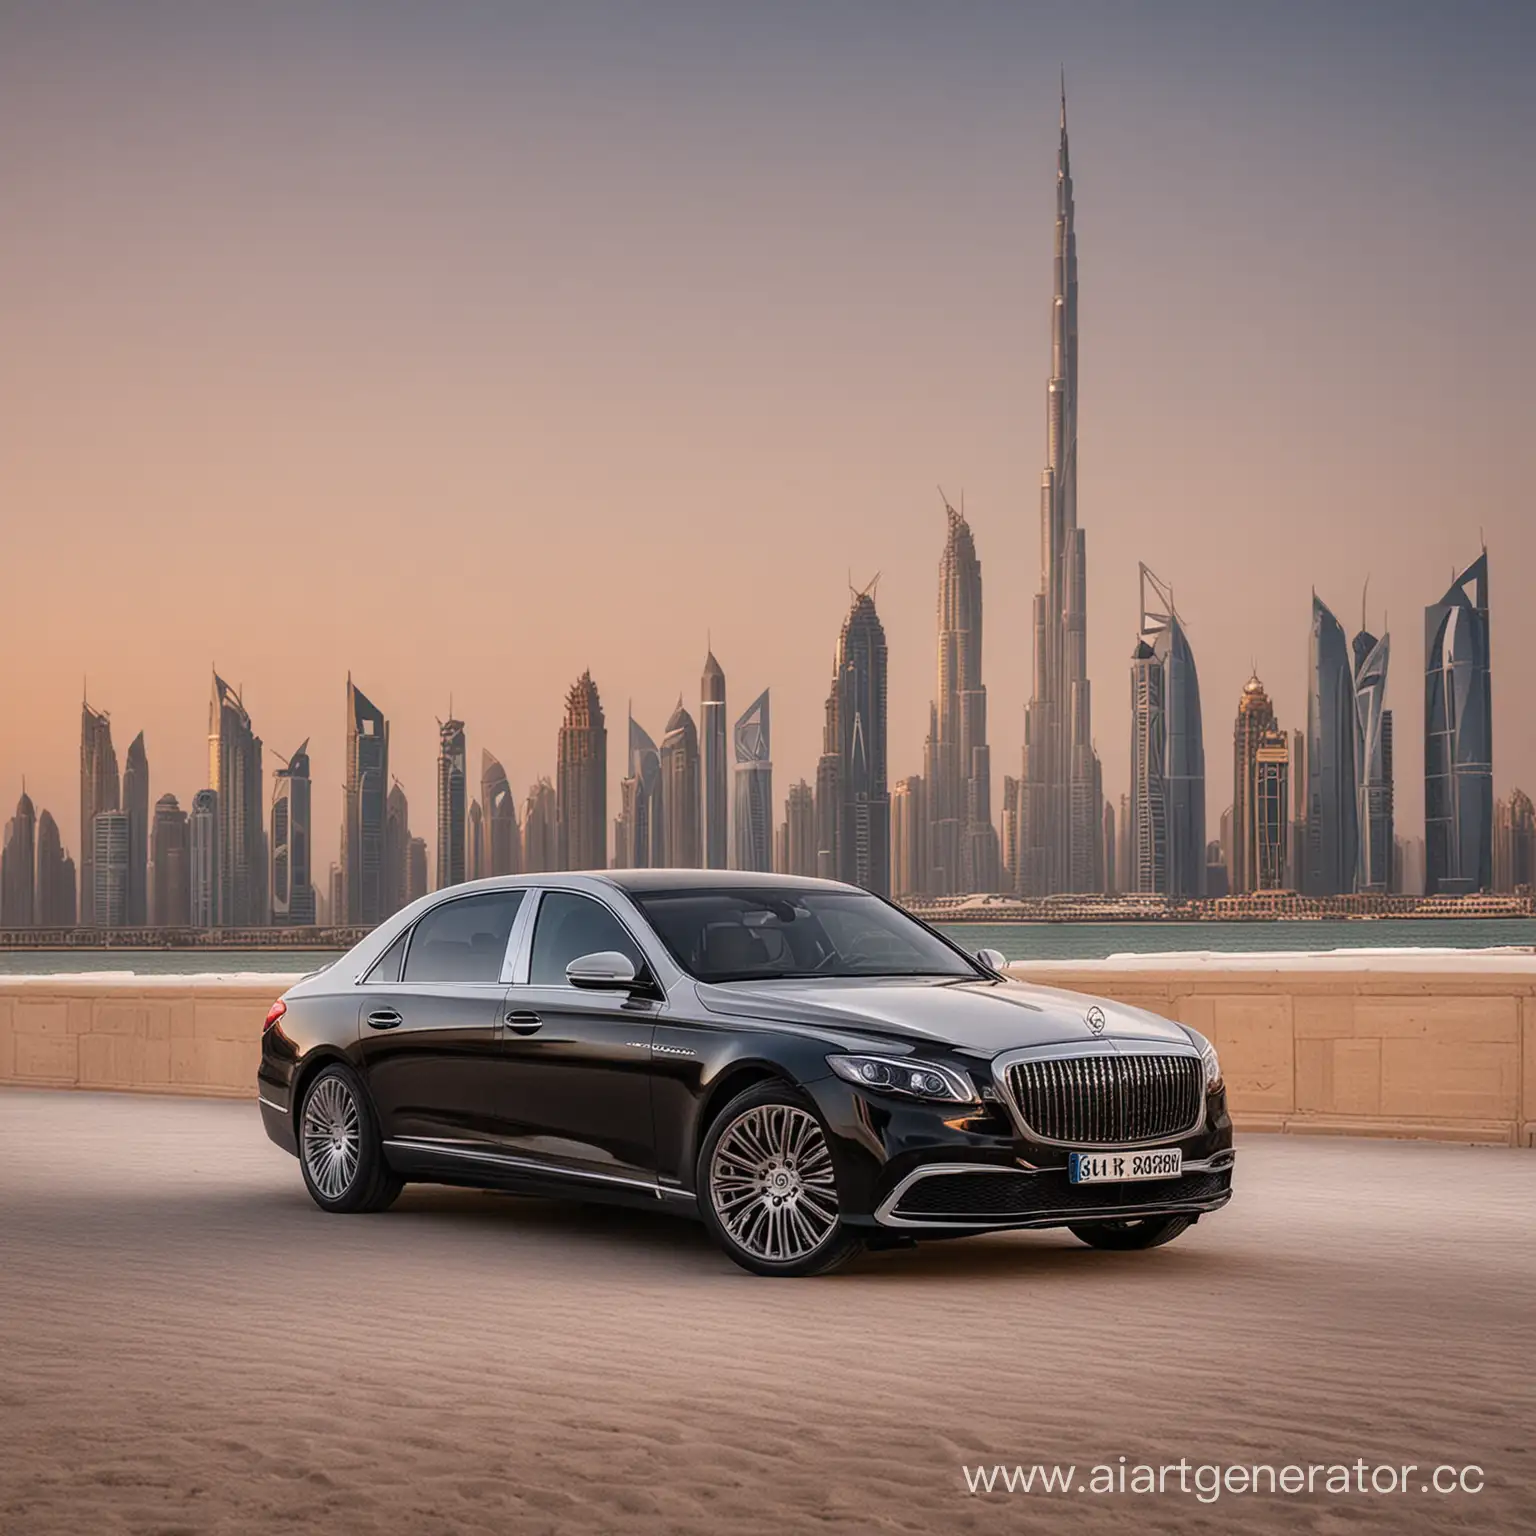 Luxury-Maybach-Car-in-Dubai-Skyline